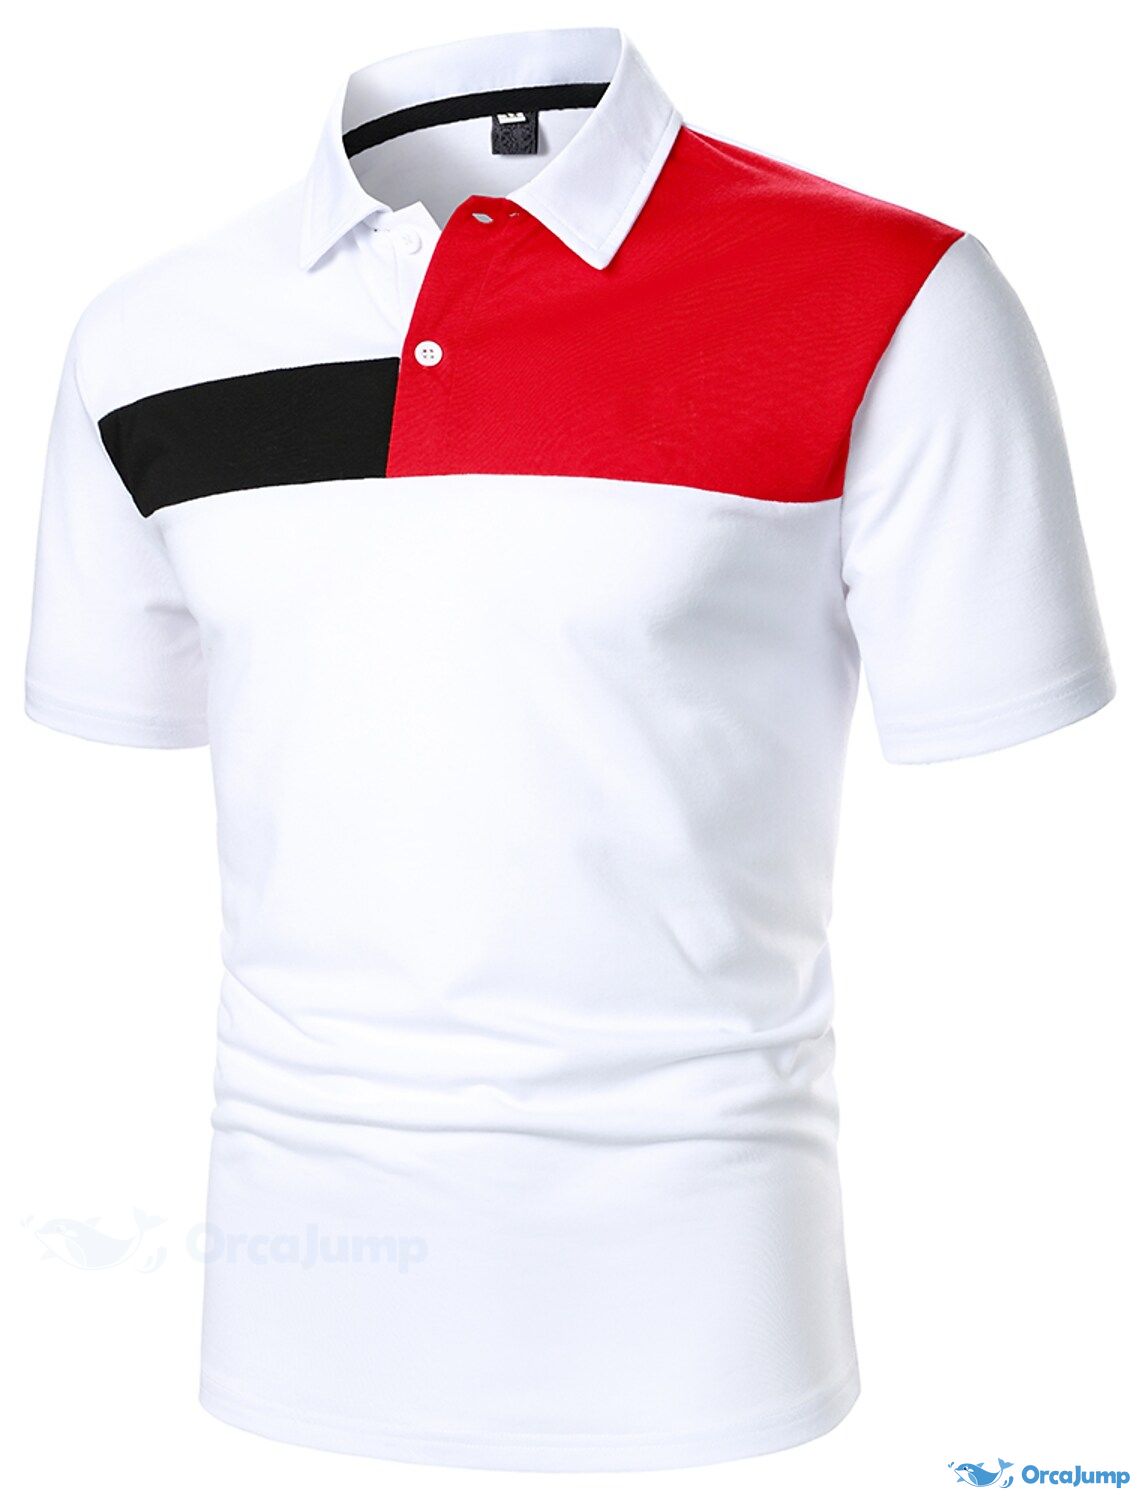 OrcaJump - Mens Geometric Button-down Collar Polo Shirt Dress Shirt Ca